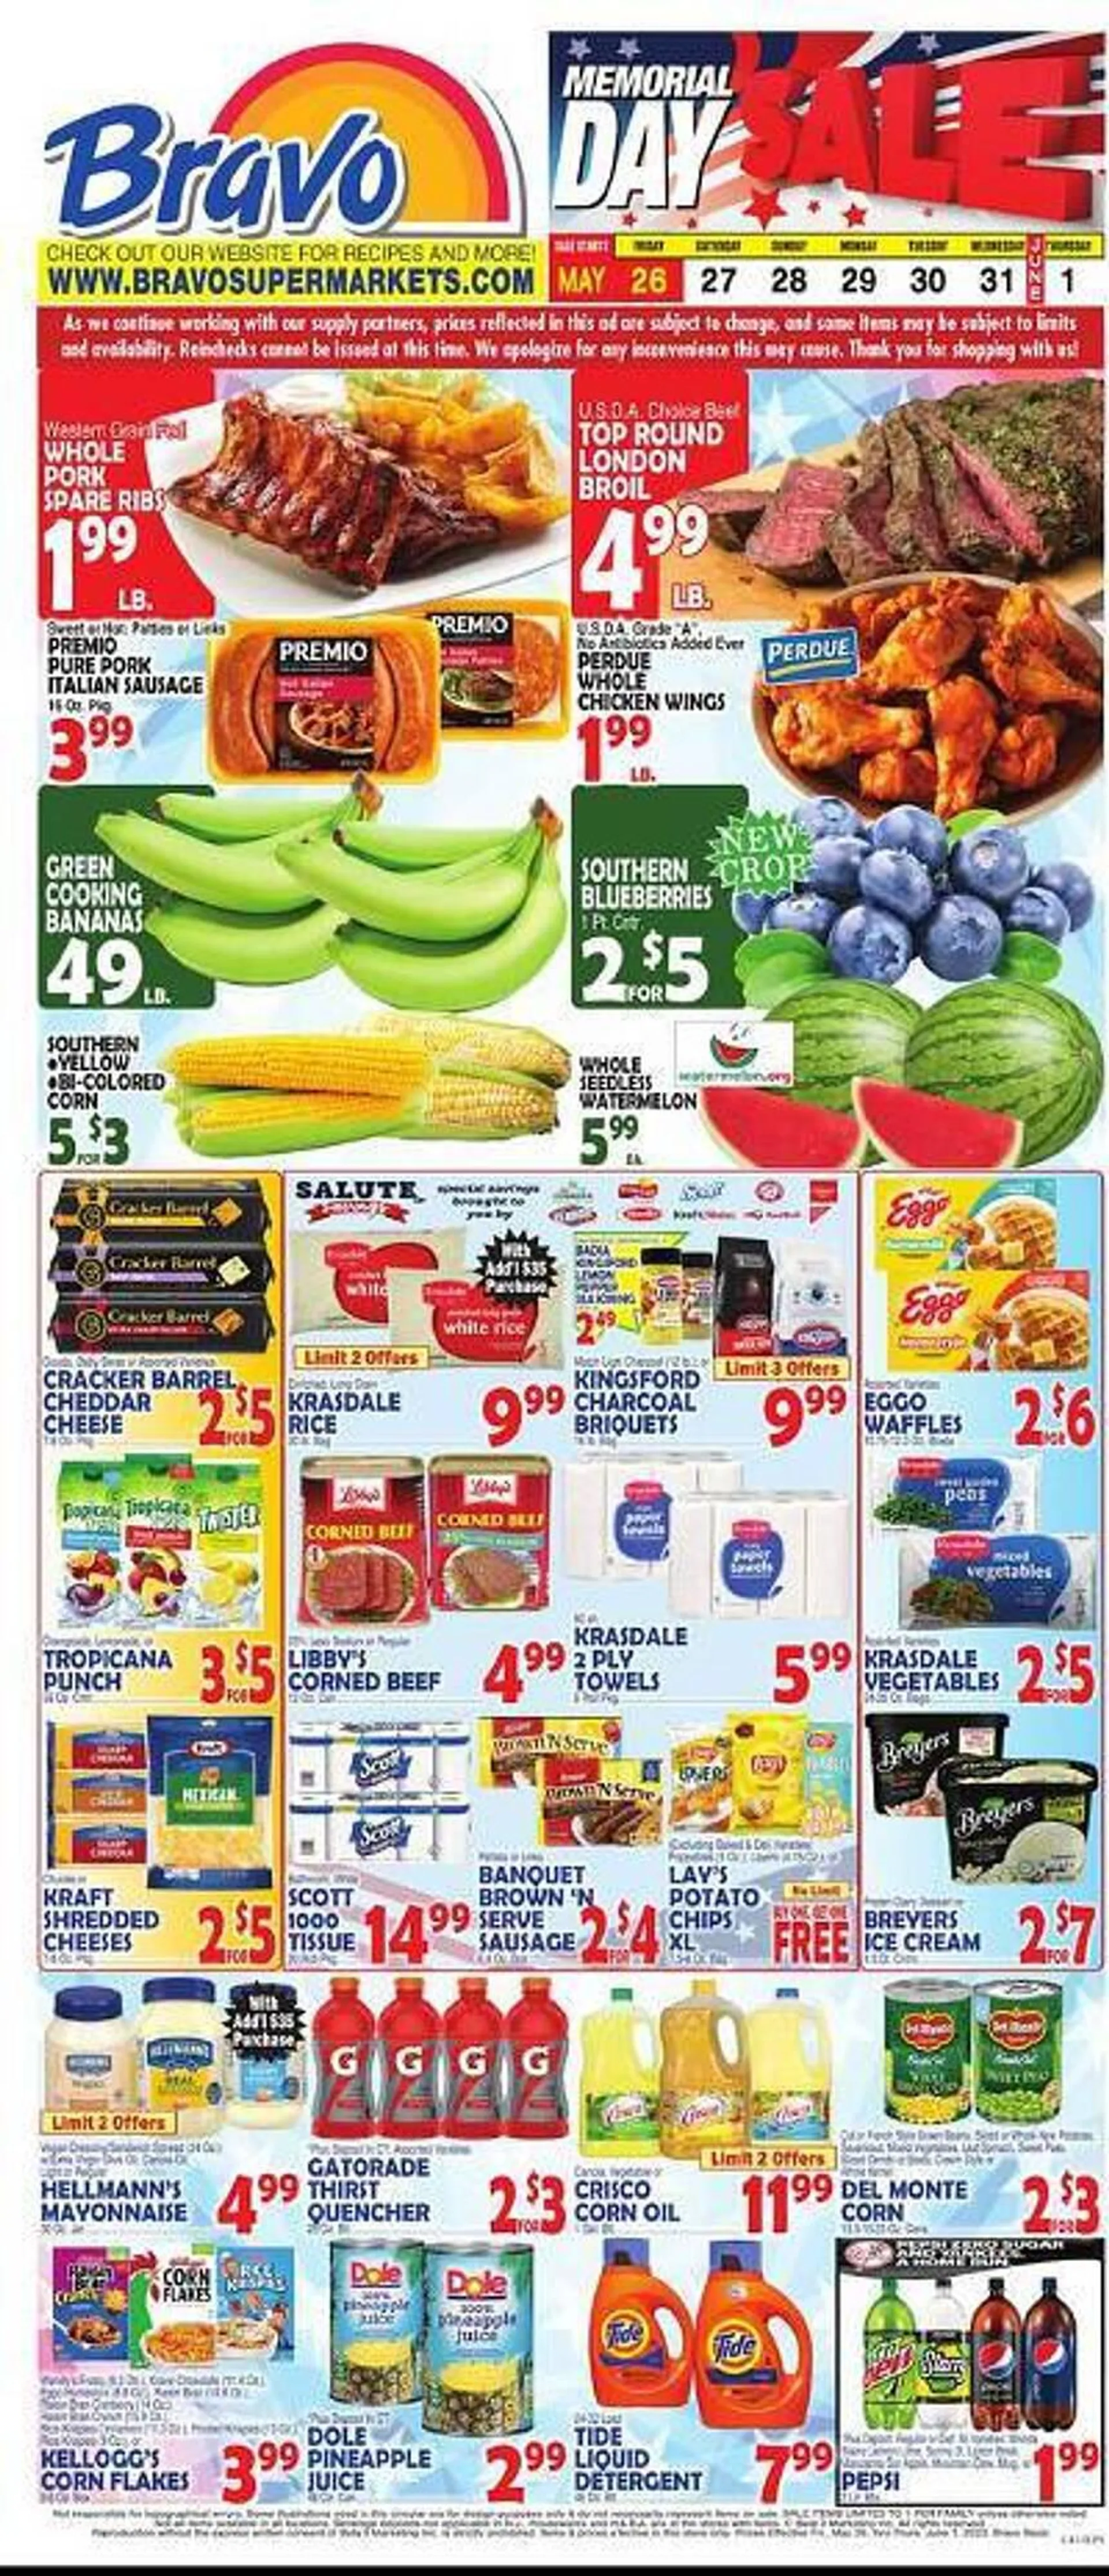 Bravo Supermarkets ad - 3